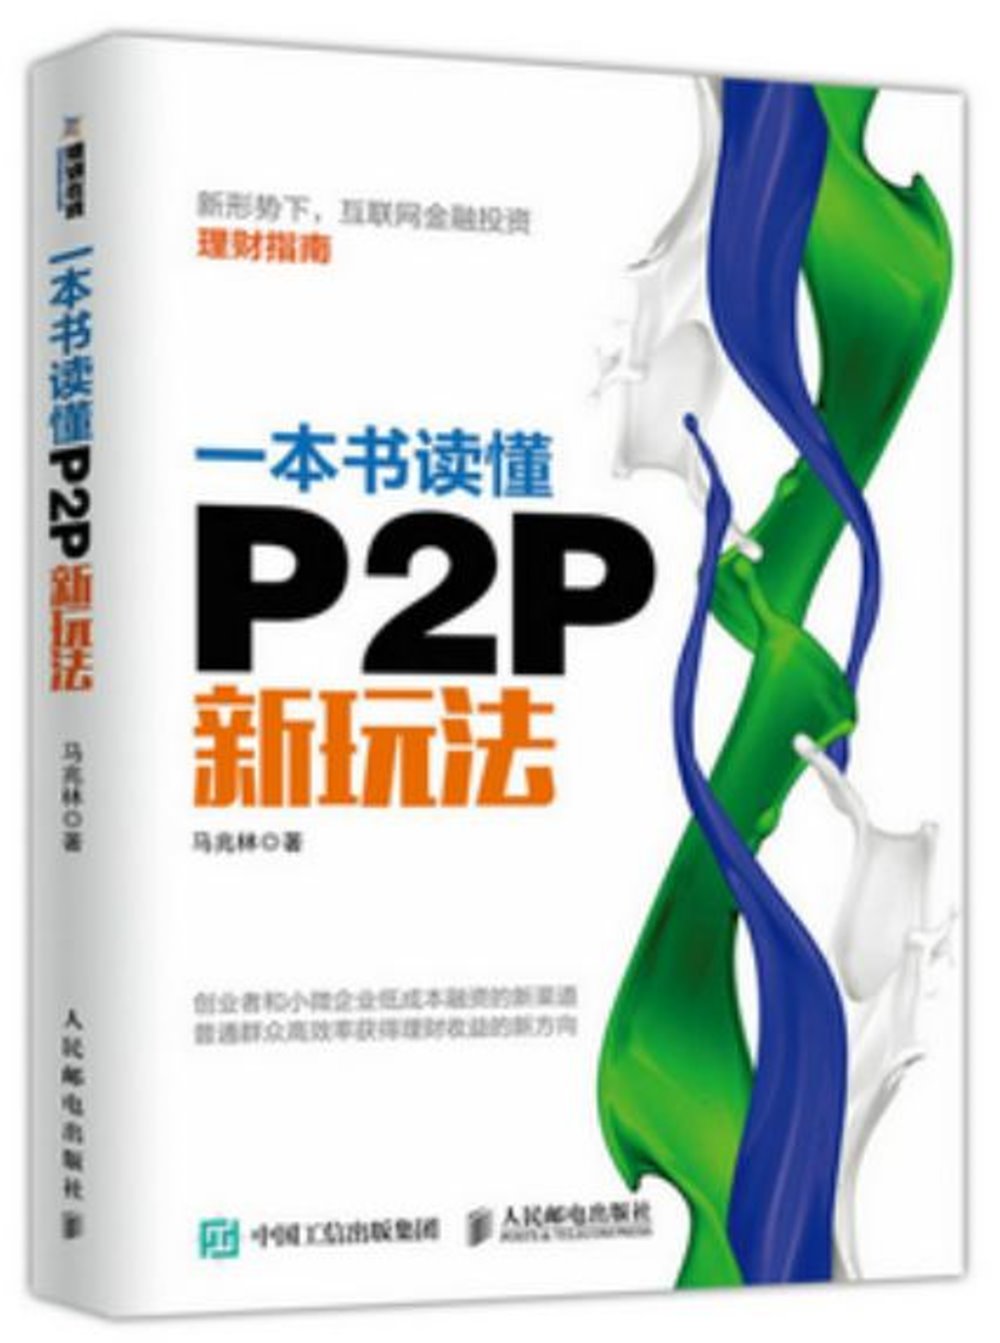 一本書讀懂P2P新玩法